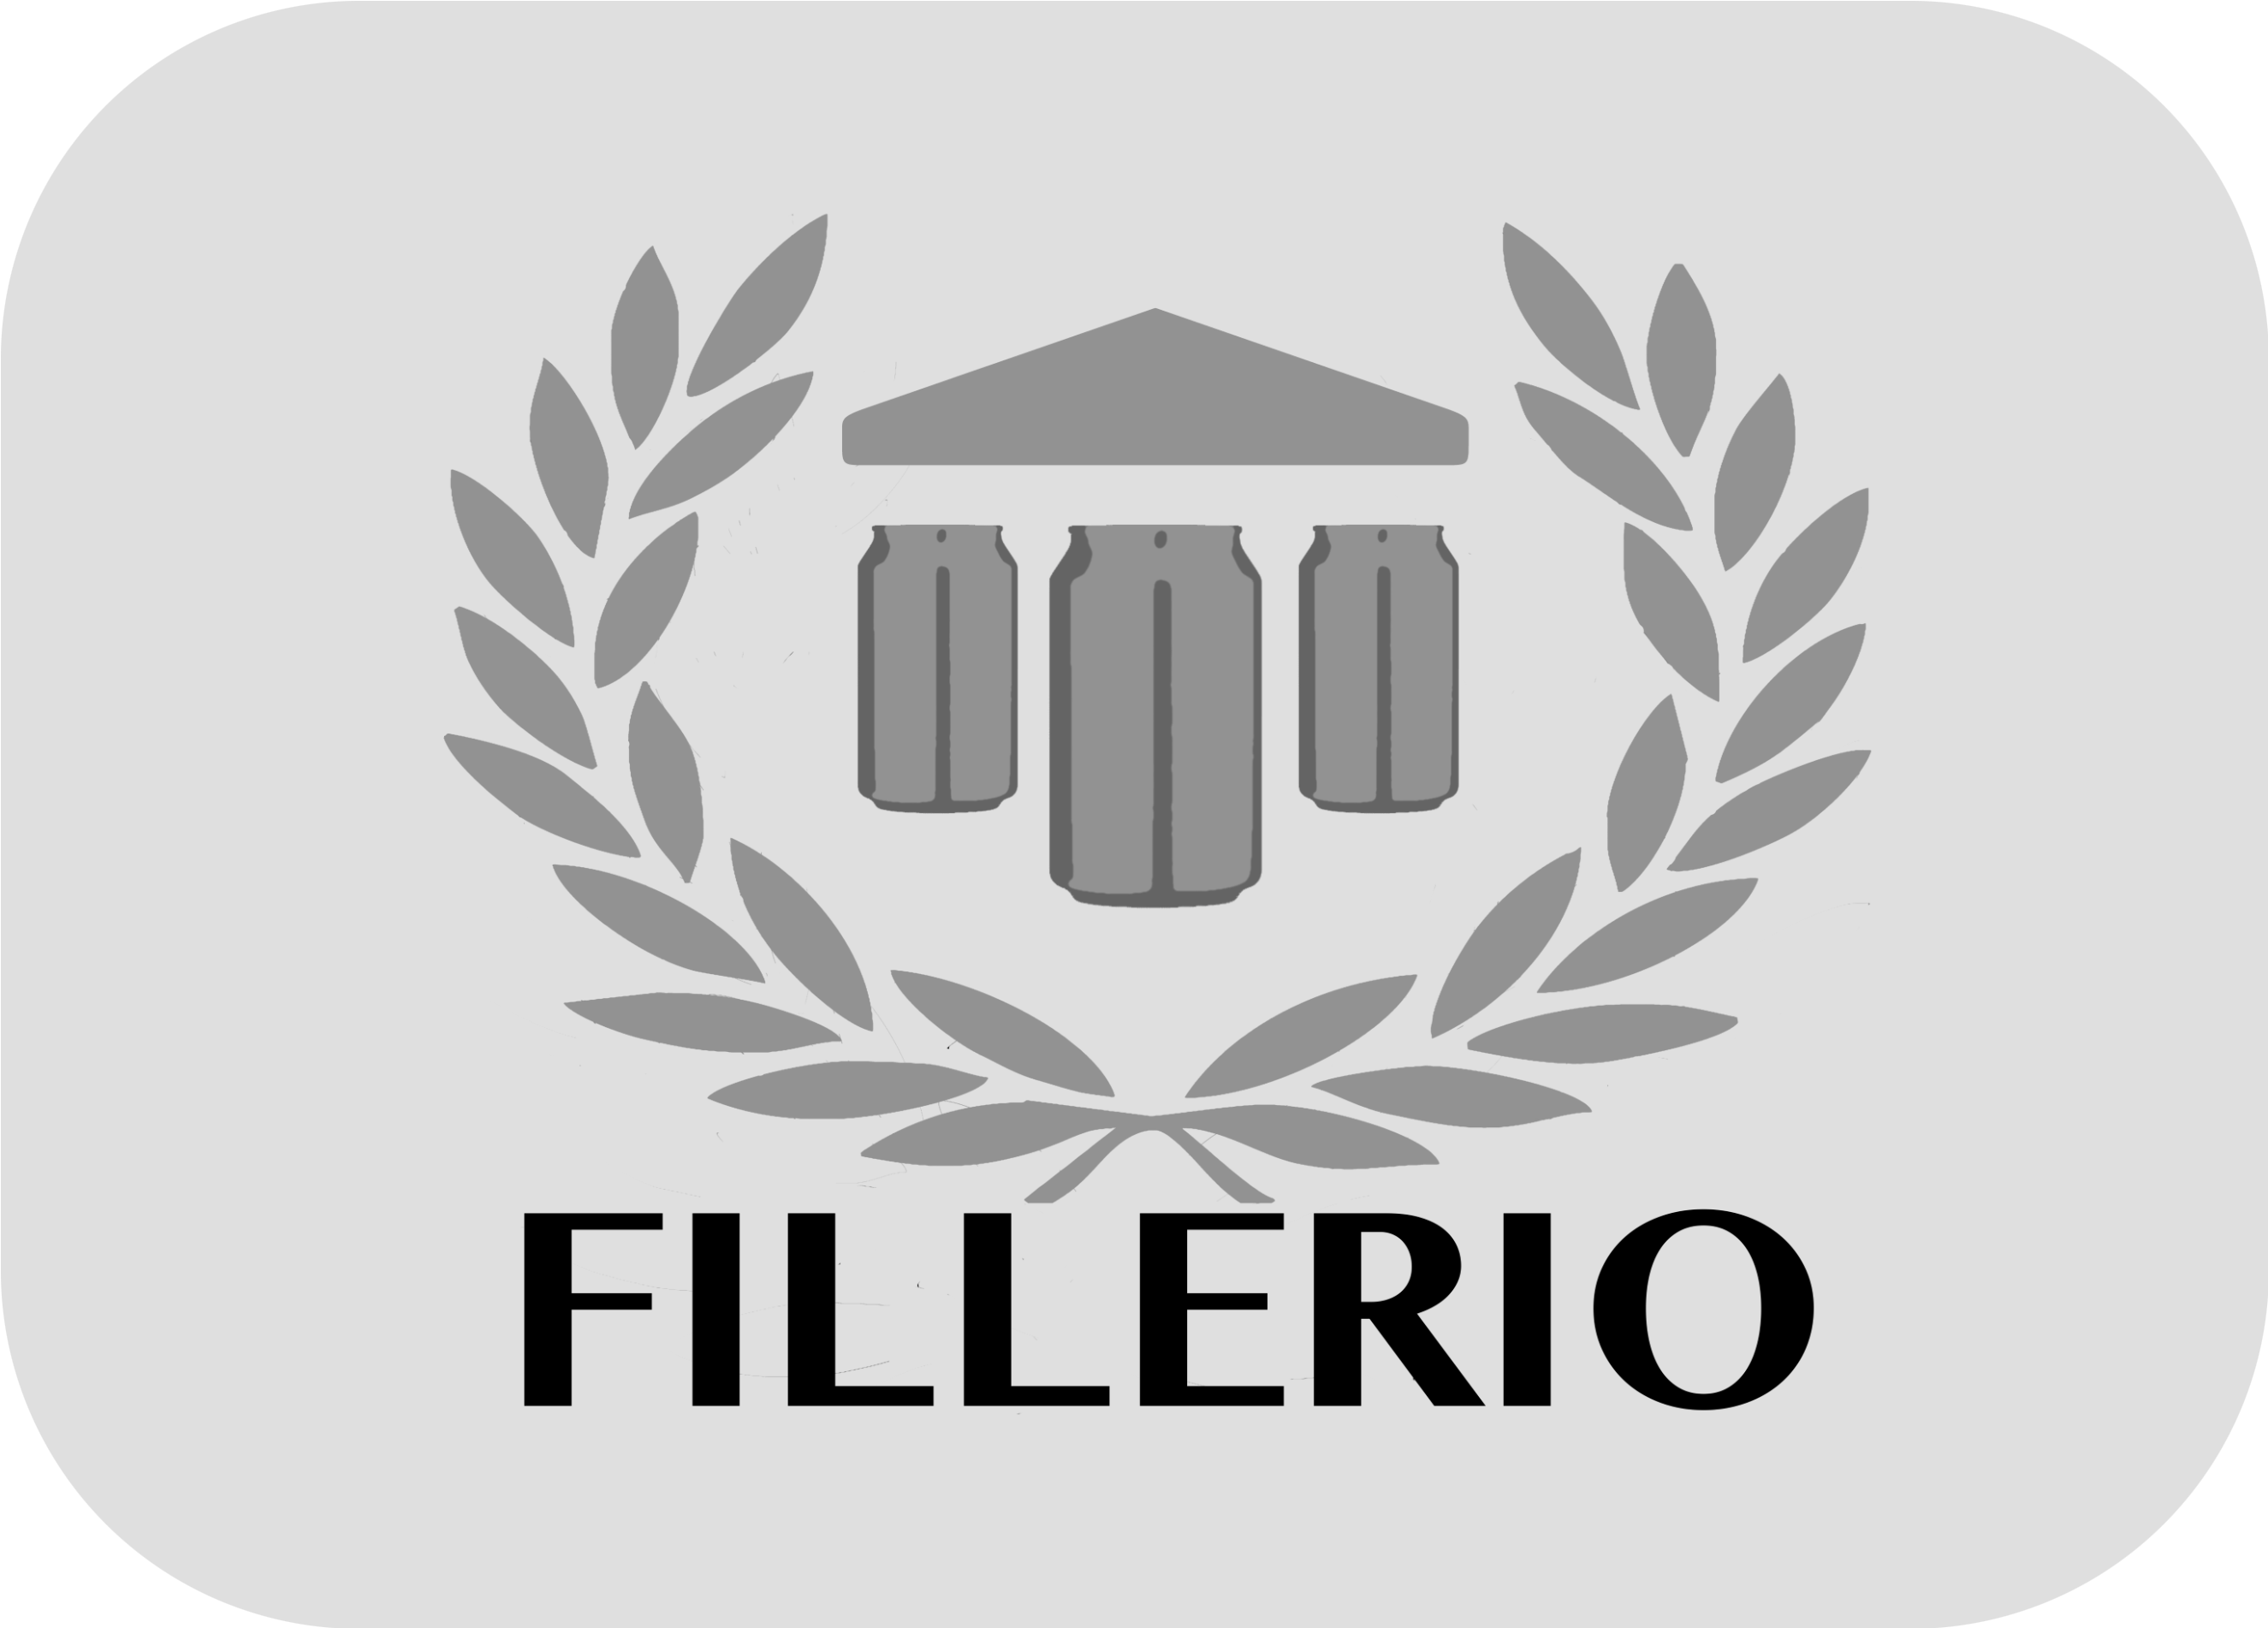 Fillerio grey